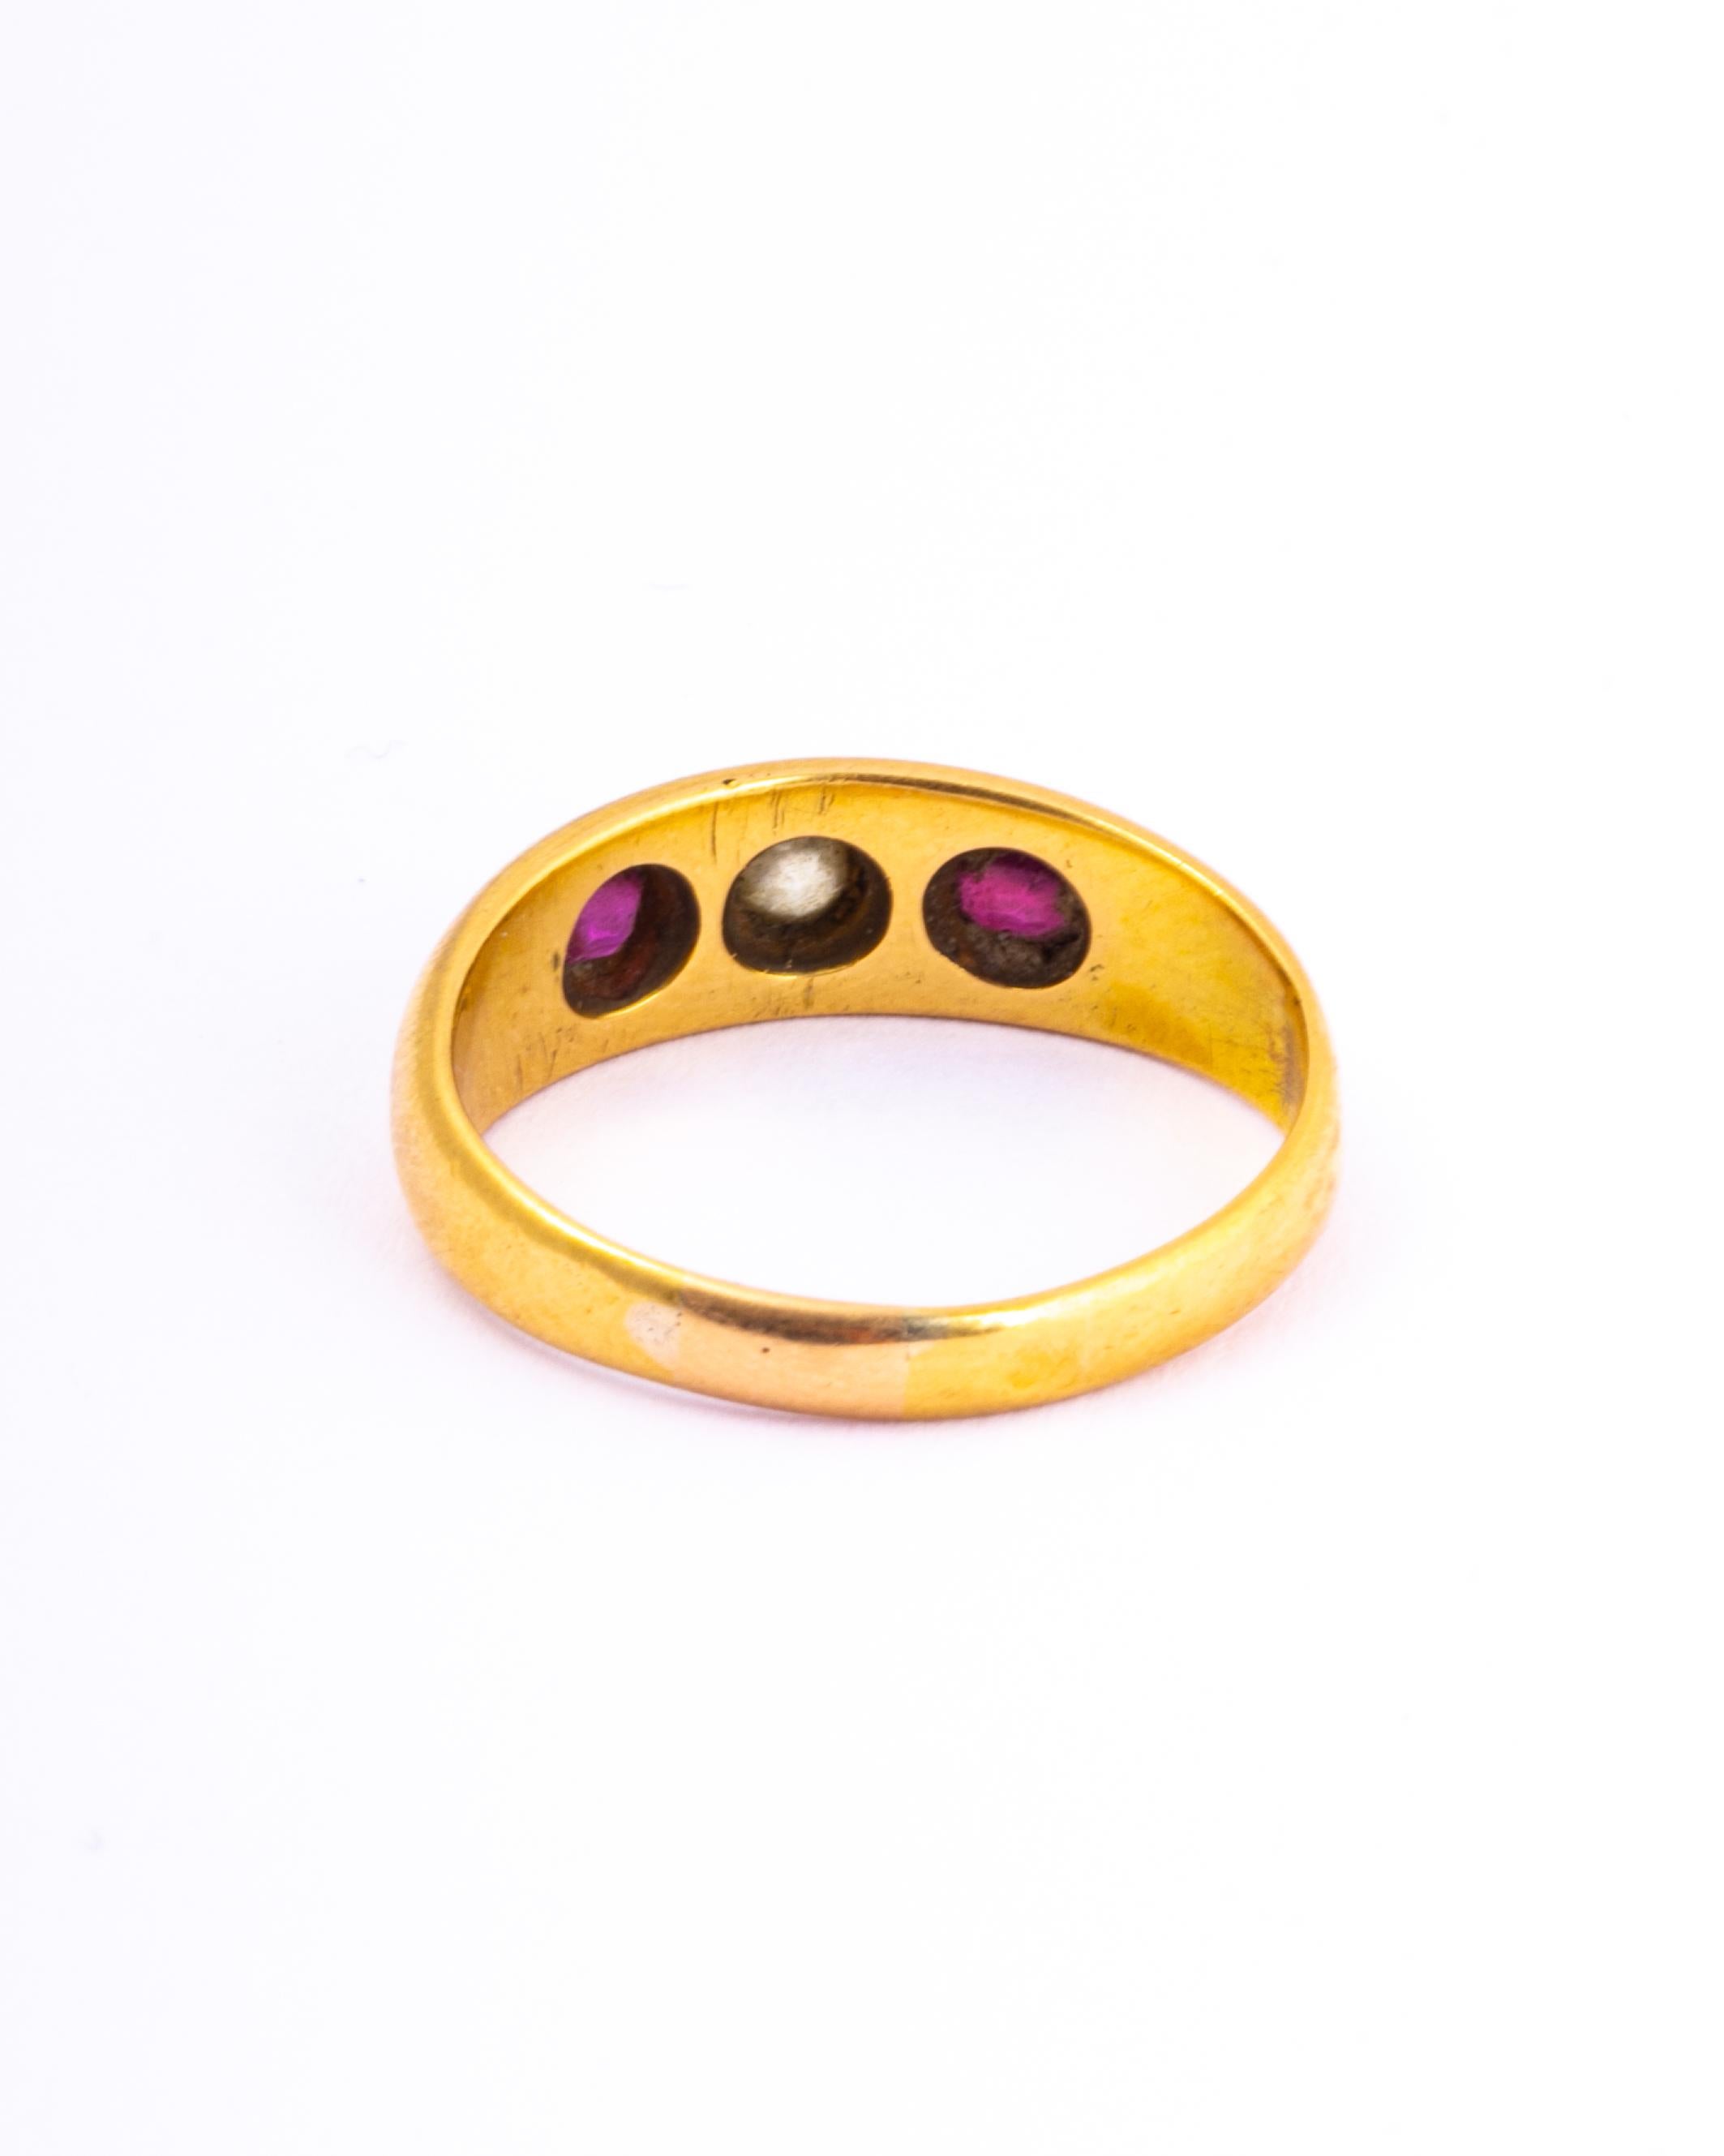 Round Cut Edwardian Ruby and Diamond 18 Carat Gold Three-Stone Gypsy Ring